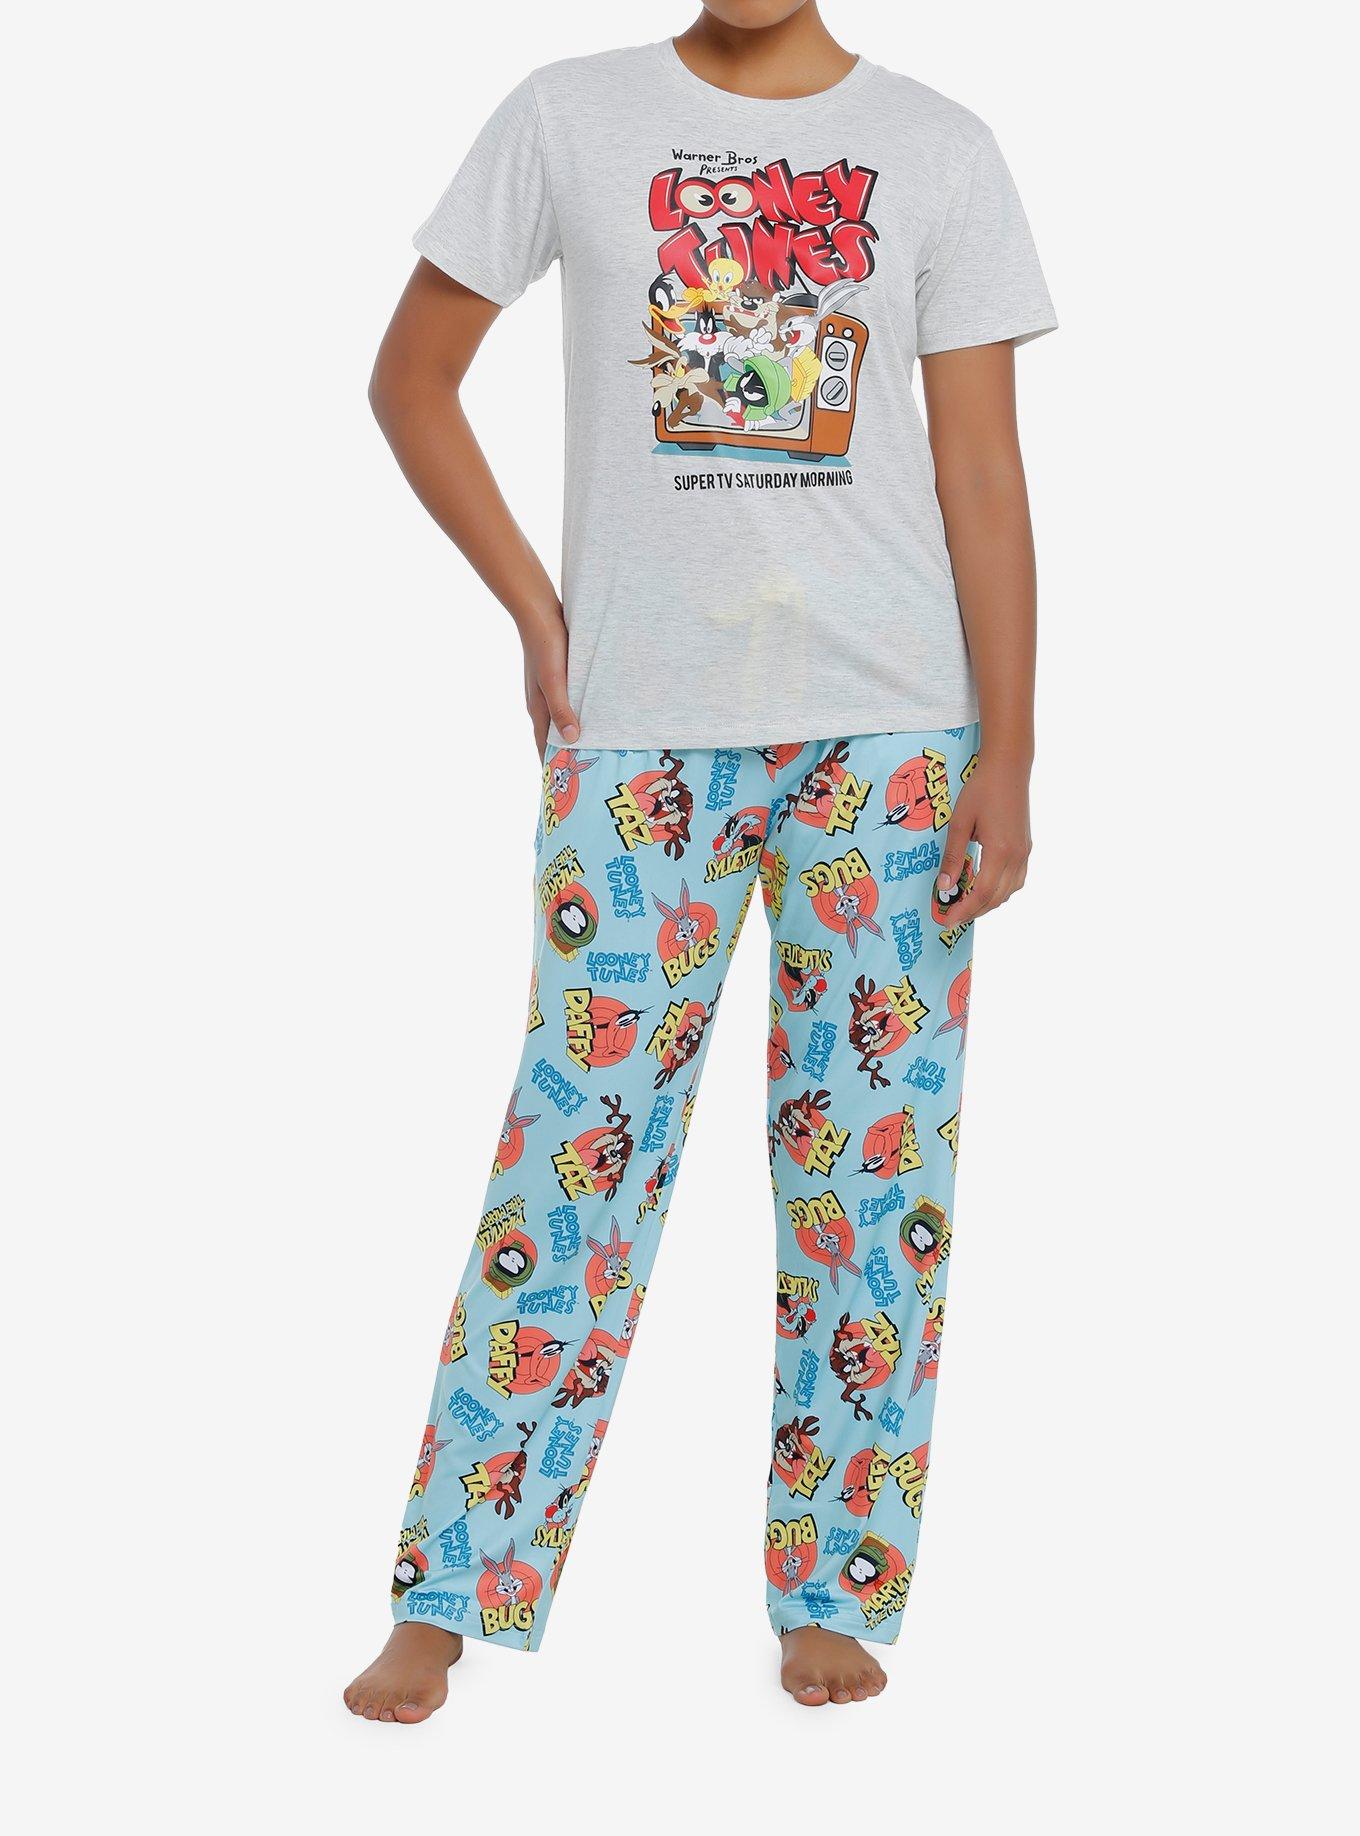 Looney Tunes Group Pajama Set